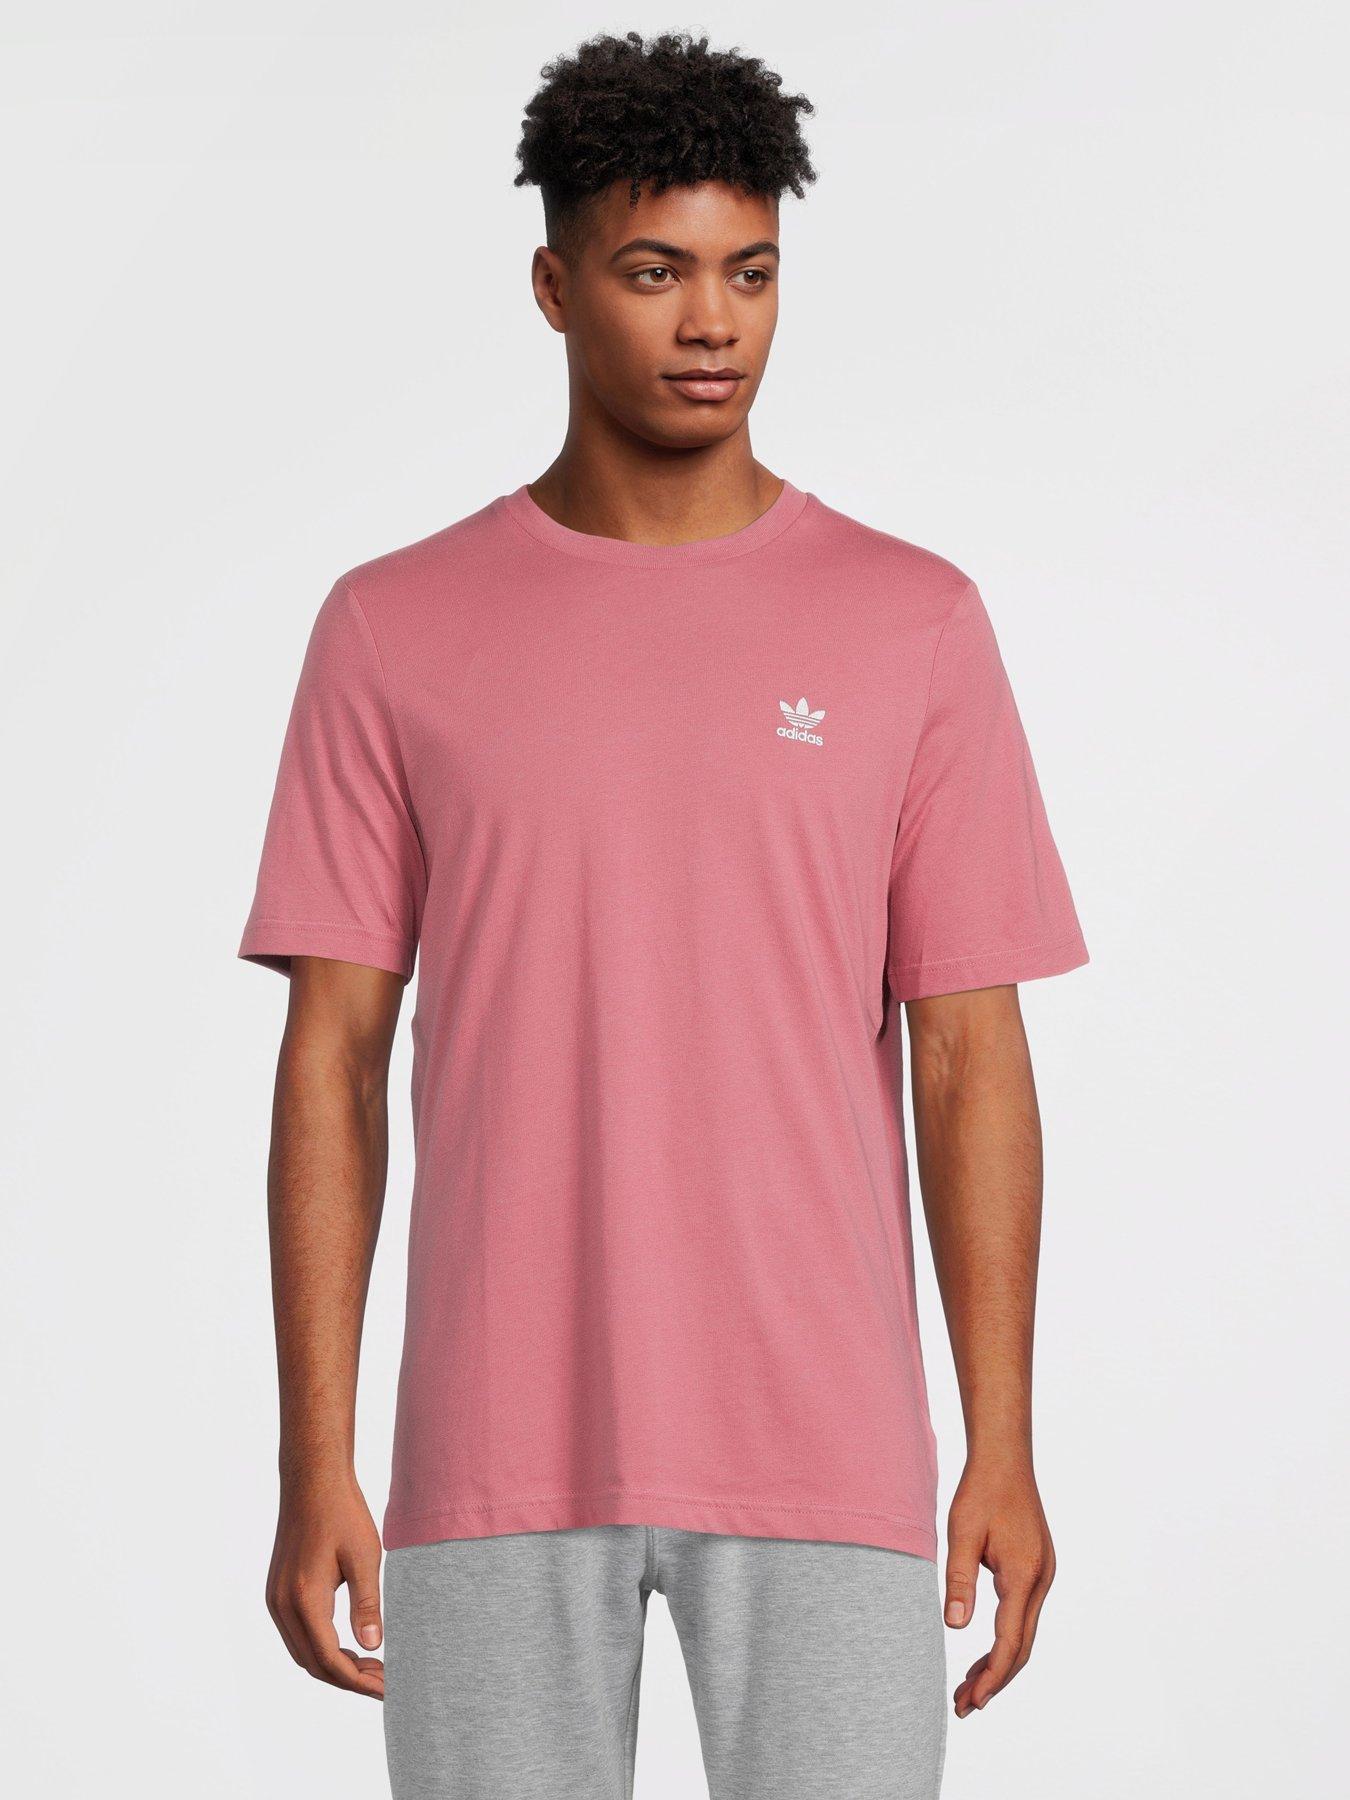 Vervormen Gastheer van Beweren Pink | T-shirts & polos | Mens sports clothing | Sports & leisure |  www.very.co.uk